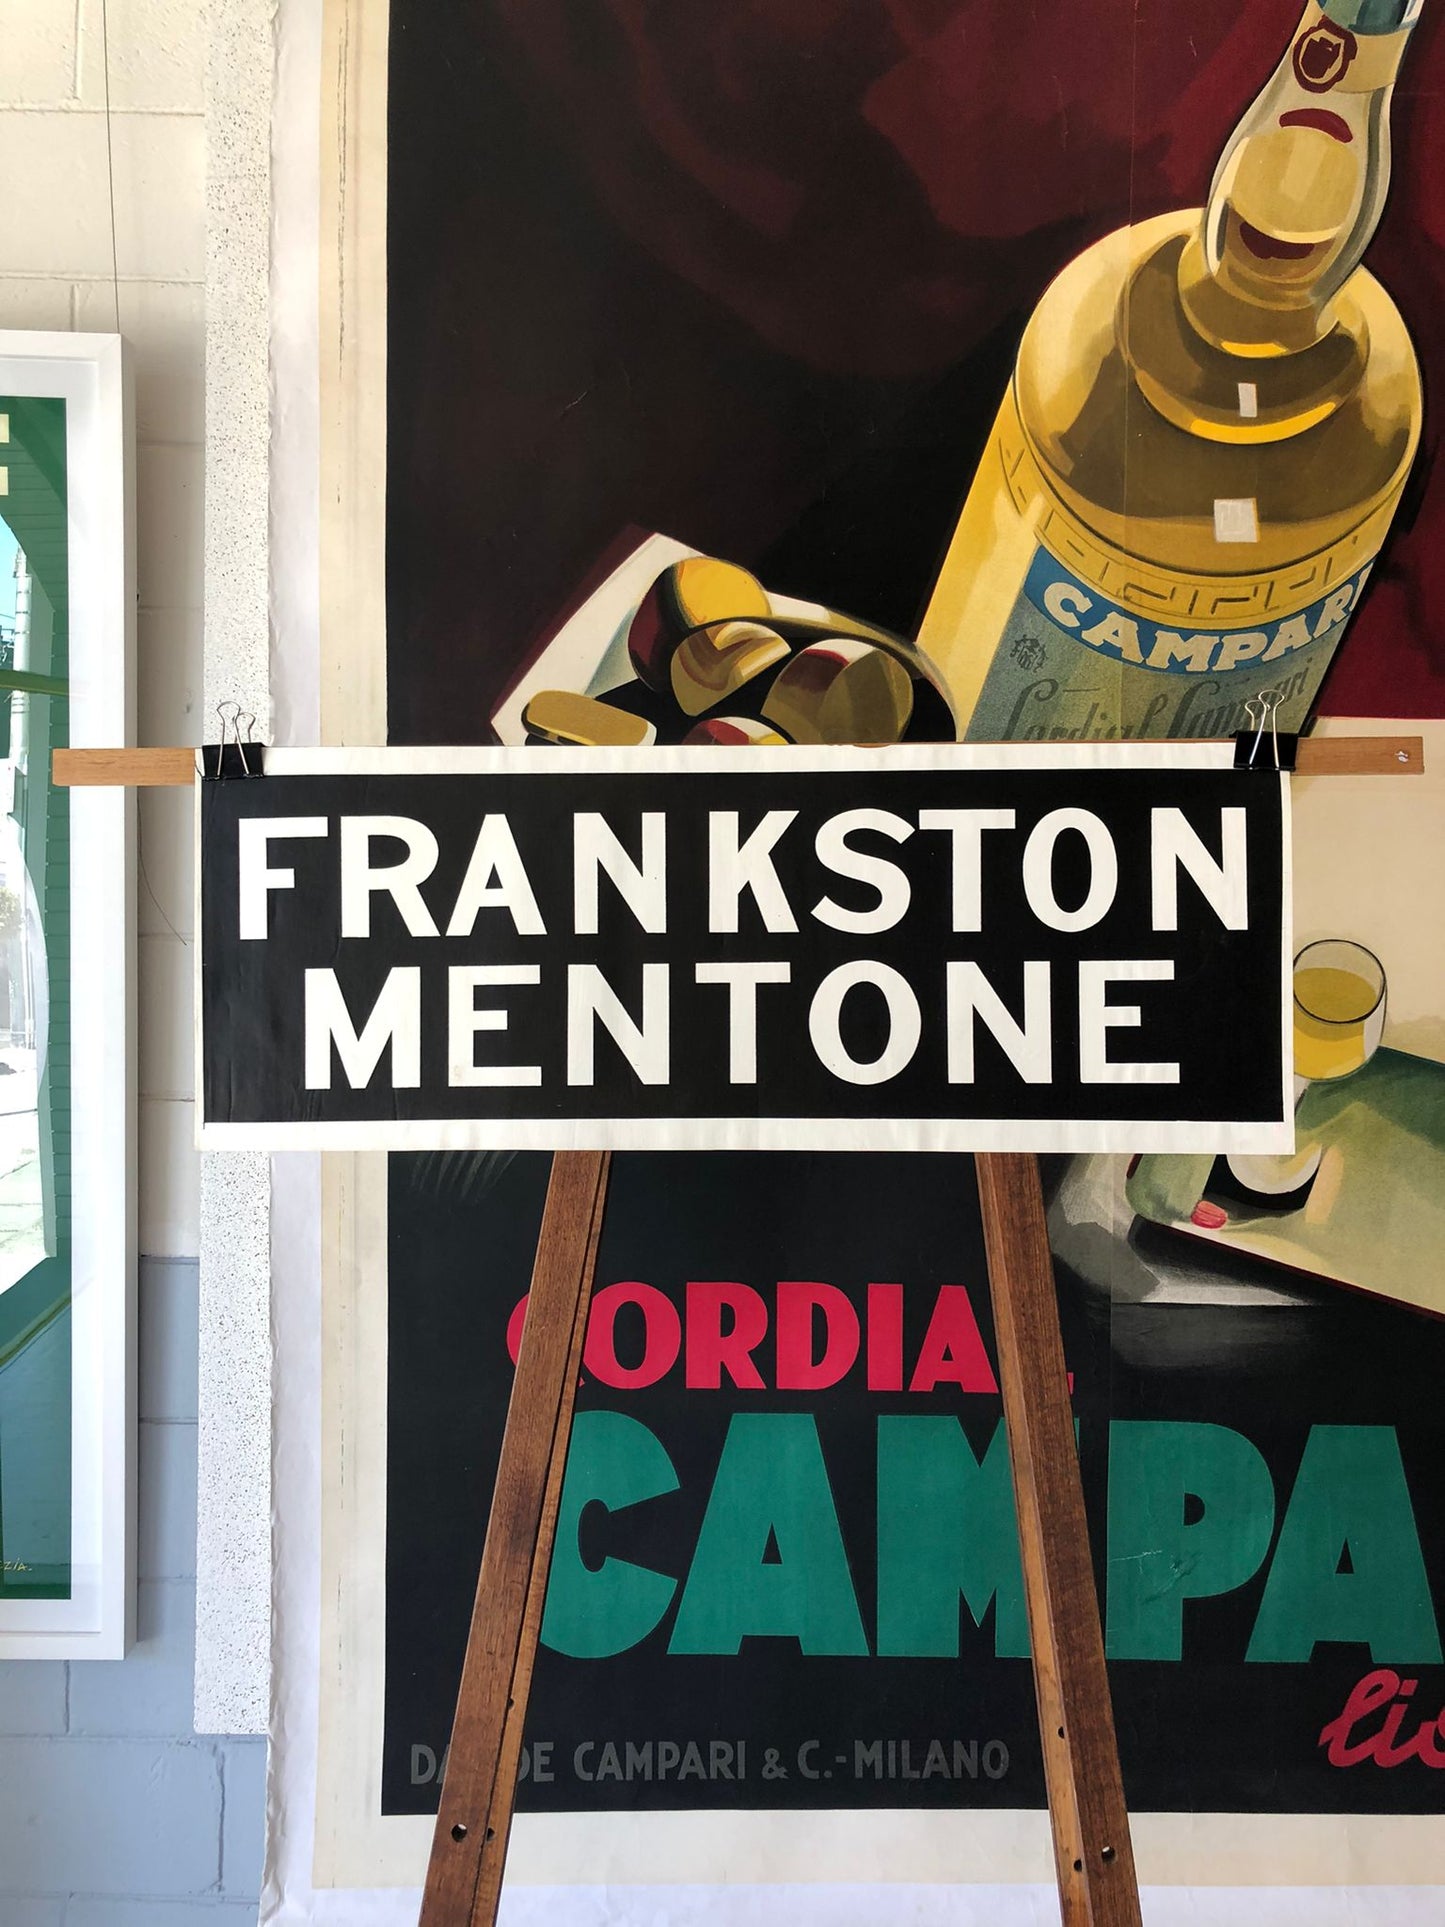 Frankston & Mentone Station Sign